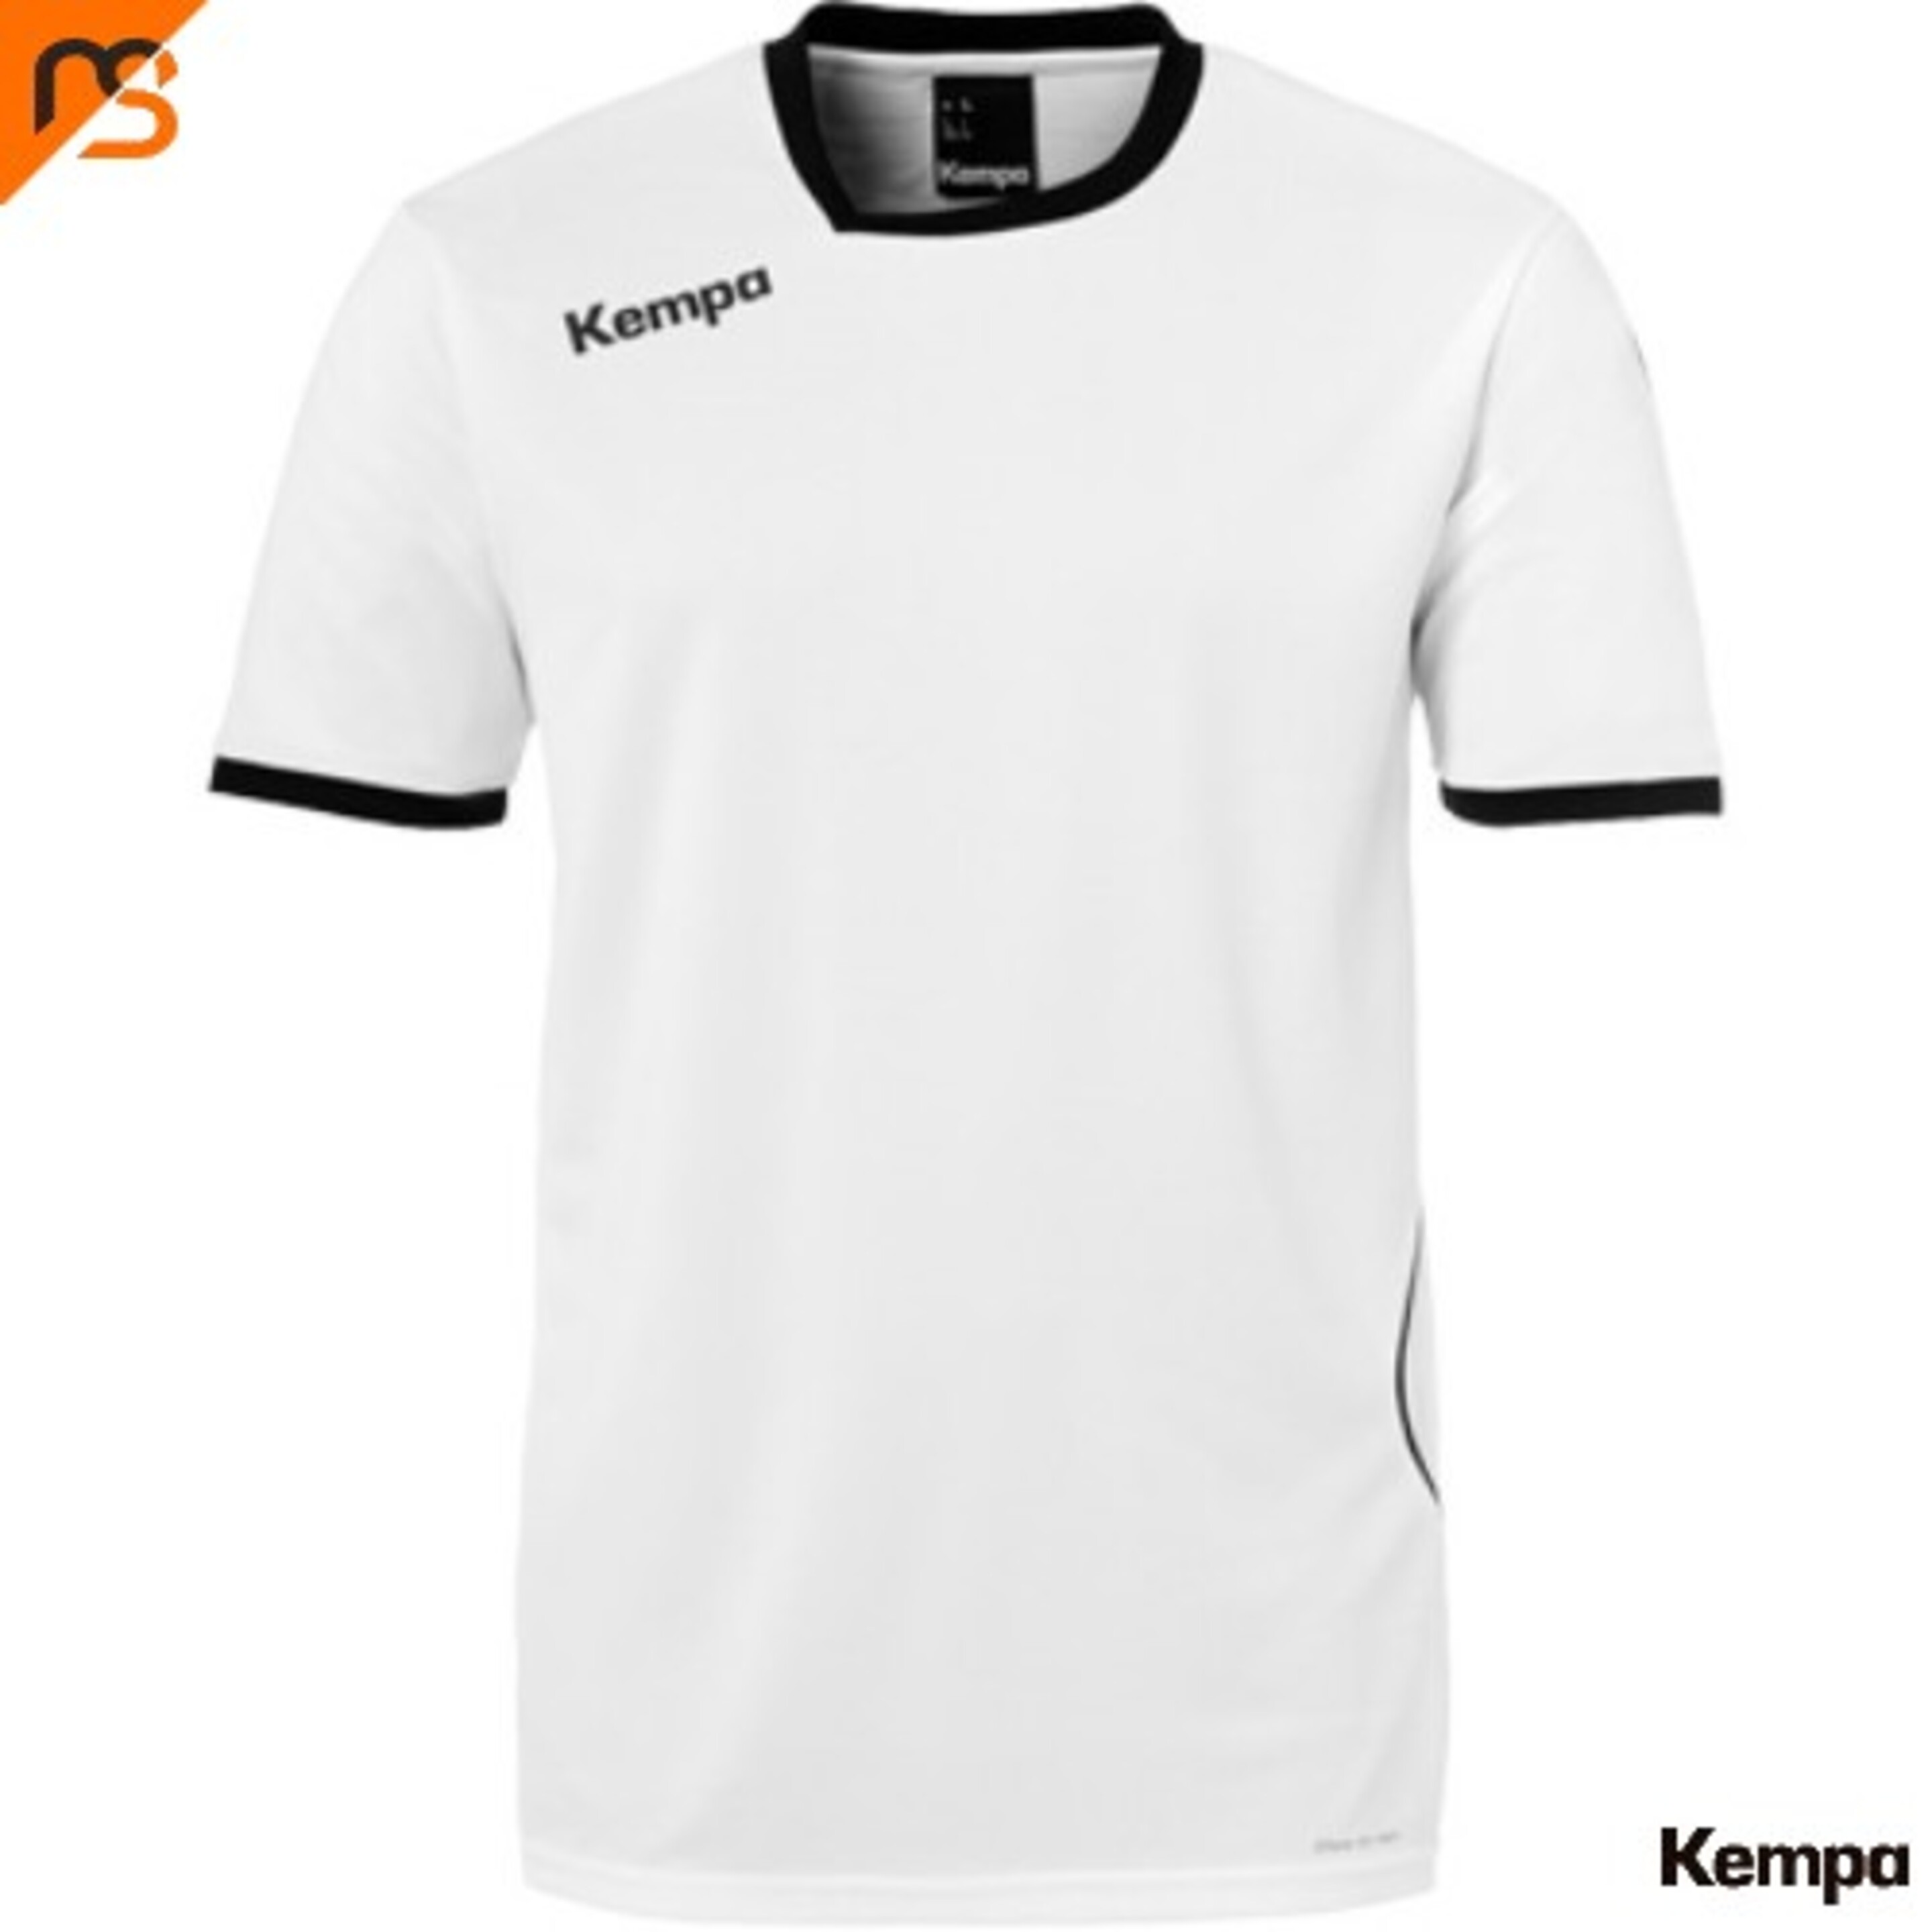 Curve Camiseta Blanco/negro Kempa - blanco - 